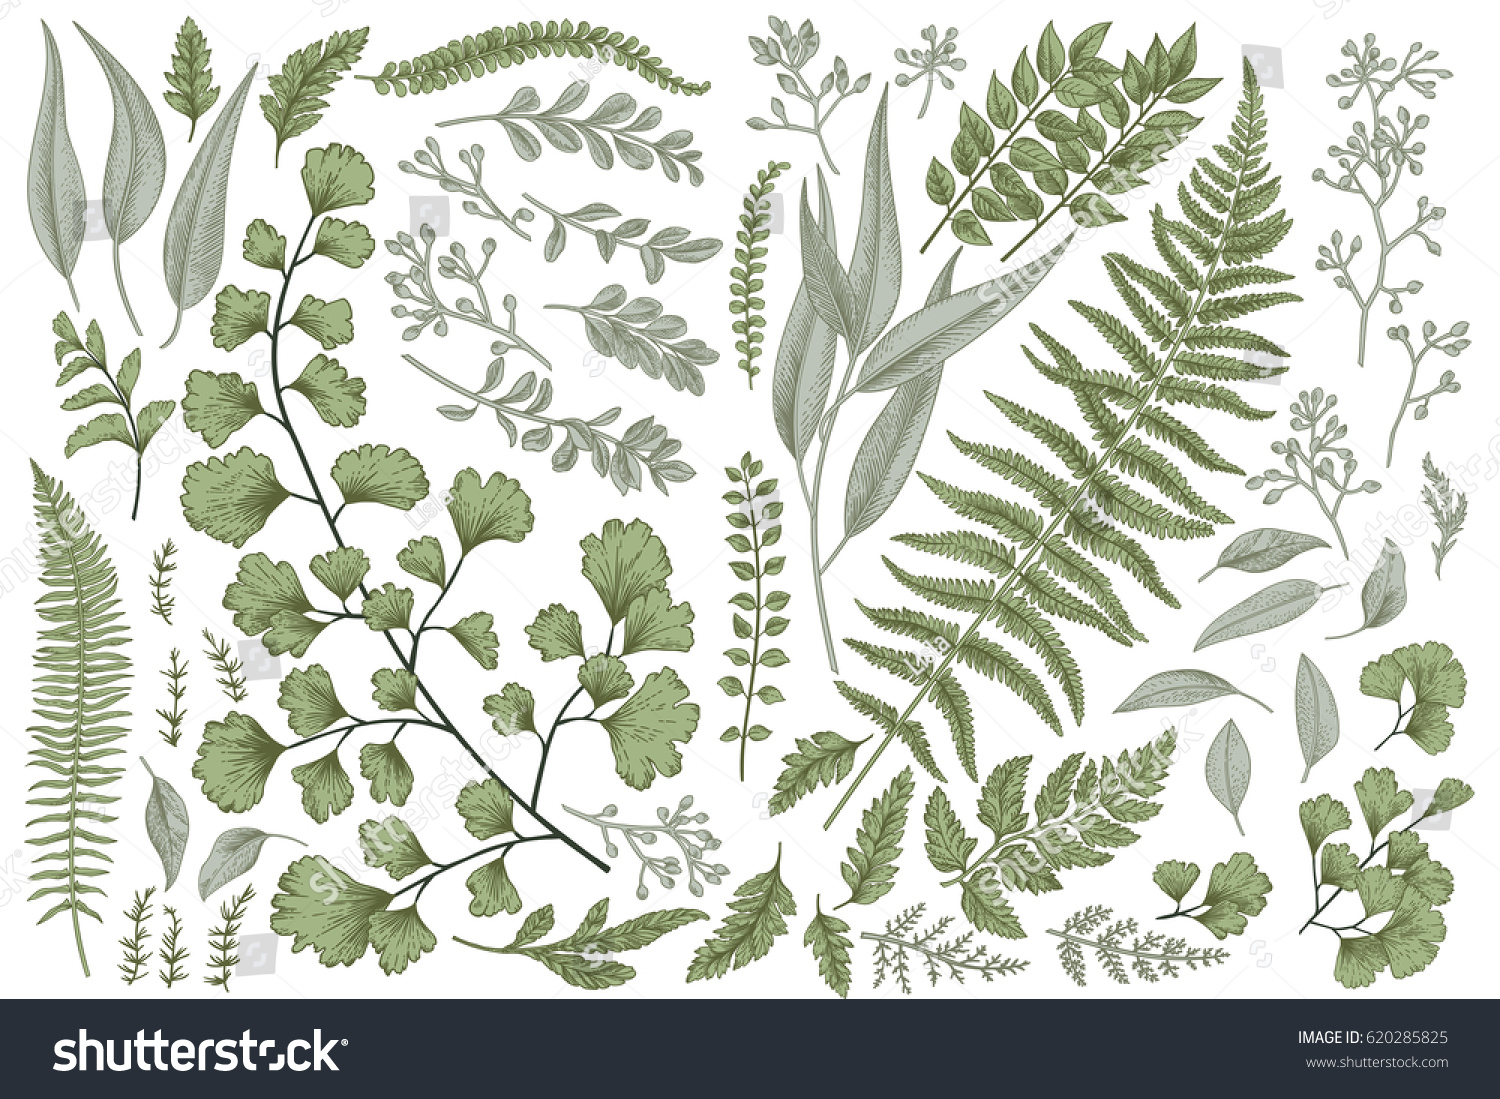 Set with leaves. Botanical illustration. Fern, eucalyptus, boxwood. Vintage floral background. Vector design elements. Isolated.  #620285825